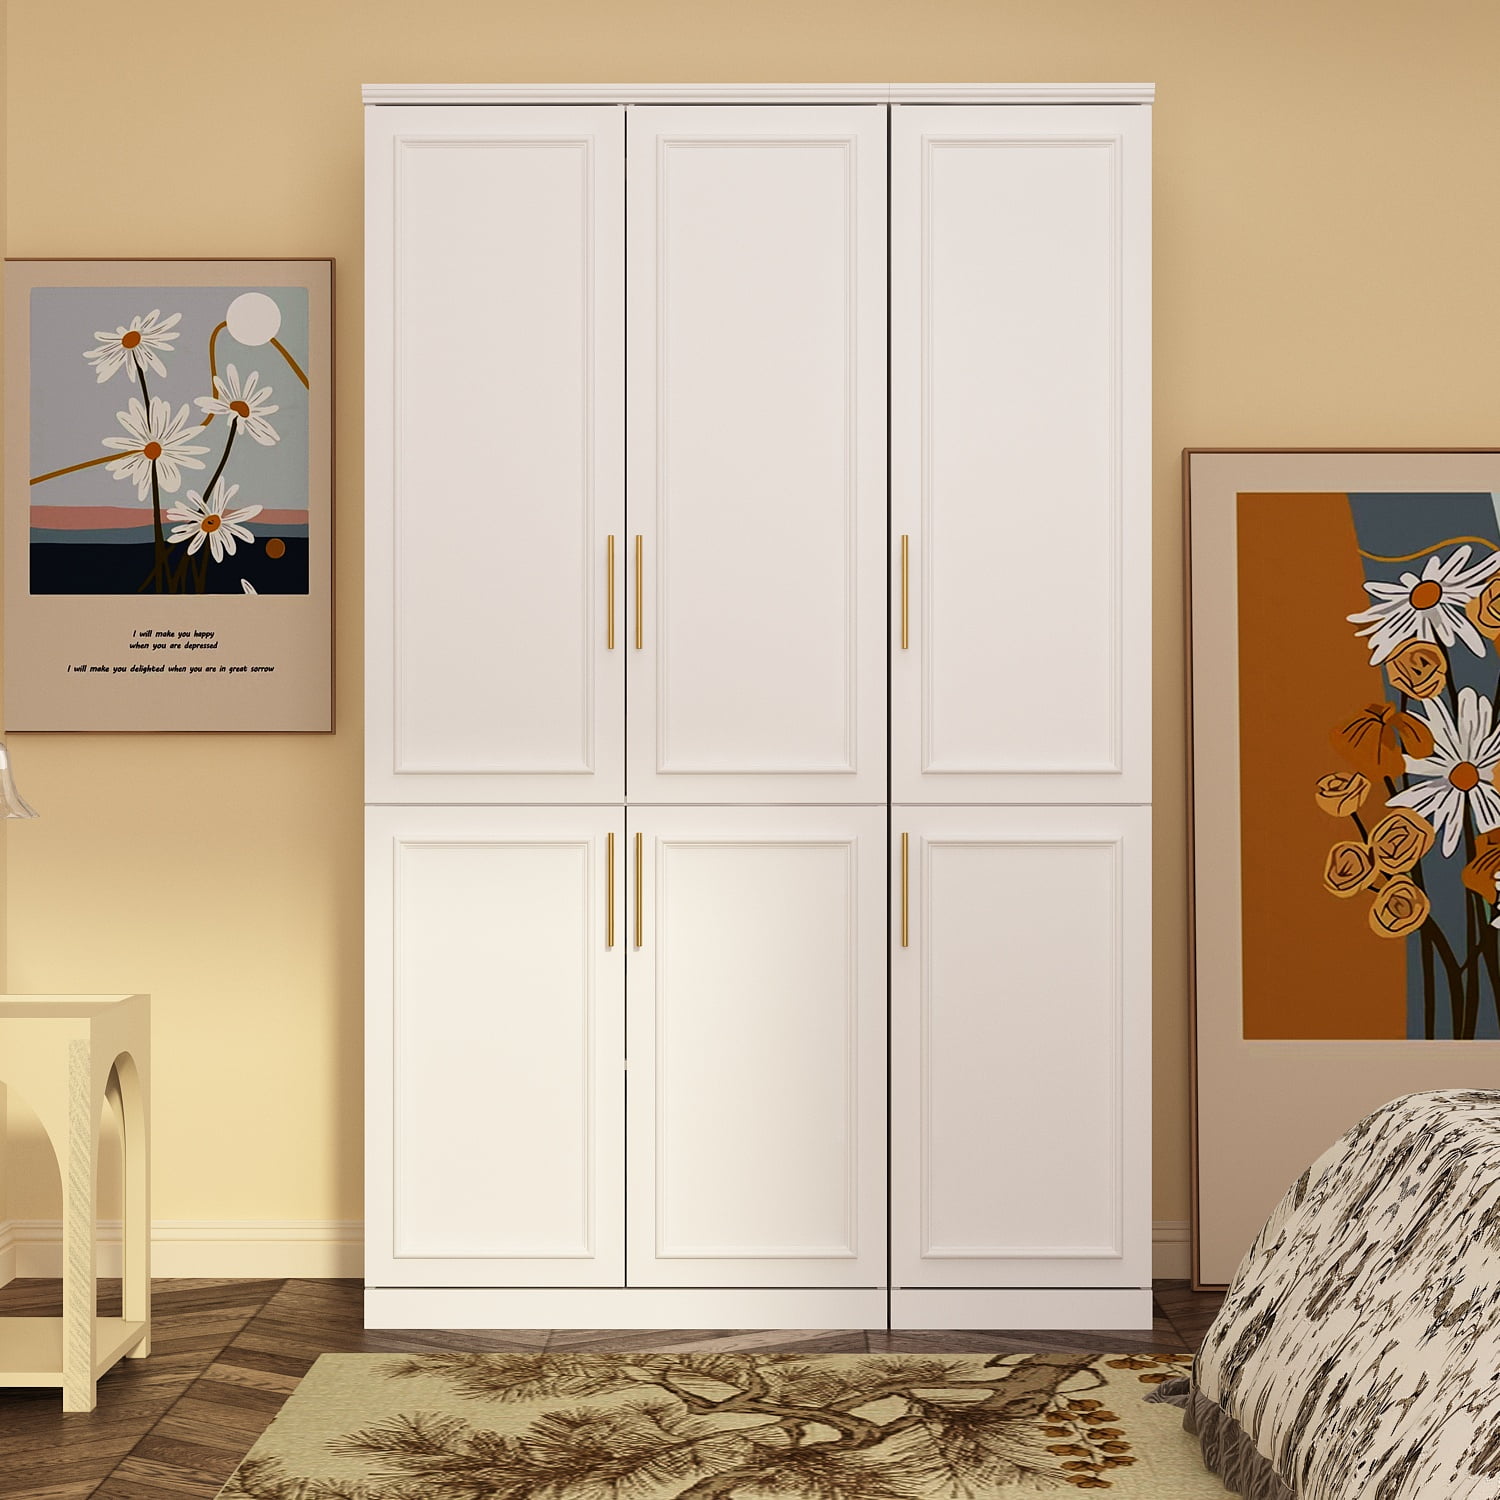 FUFU&GAGA 3 Door Bedroom Armoire with Drawers White - Walmart.com